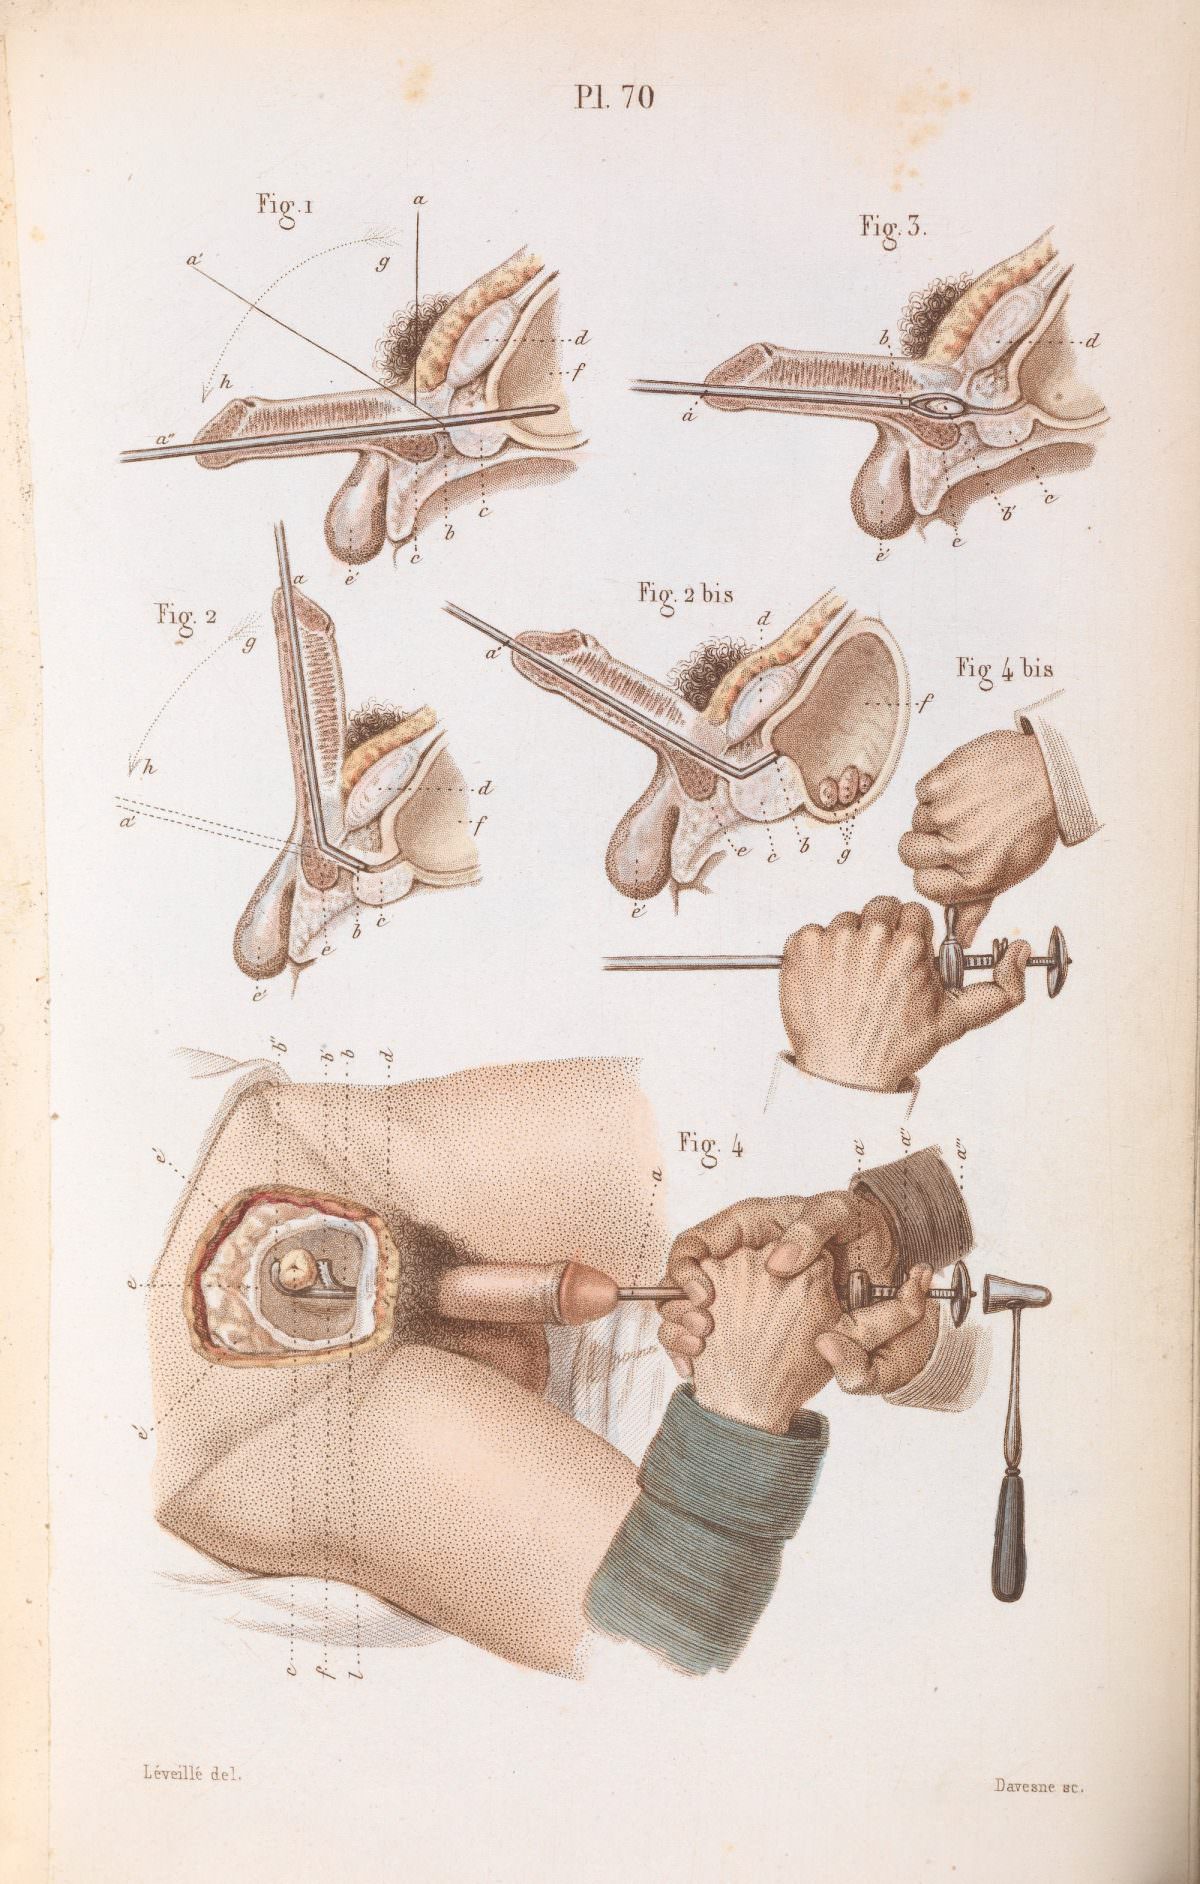 Plate 70, Surgical techniques for lithotripsy (the removal of bladder and kidney stones). Précis iconographique de médecine opératoire et d’anatomie chirurgicale by Claude Bernard (1848).